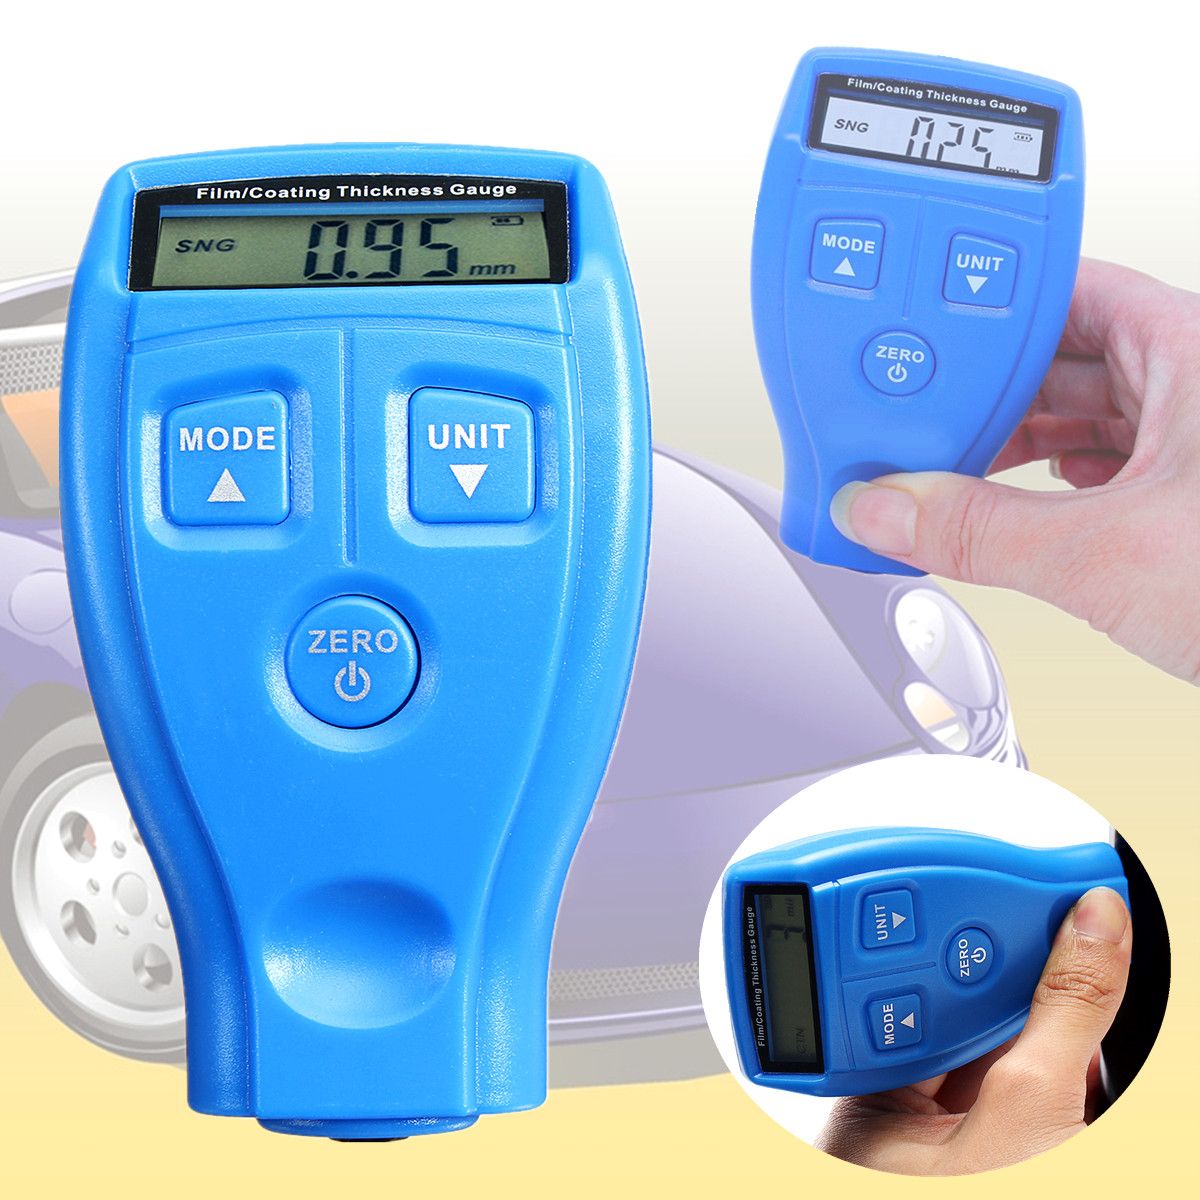 Thickness-Tester-Digital-Auto-Car-Paint-Coating-Measuring-Gauge-Meter-3-Colors-1539514